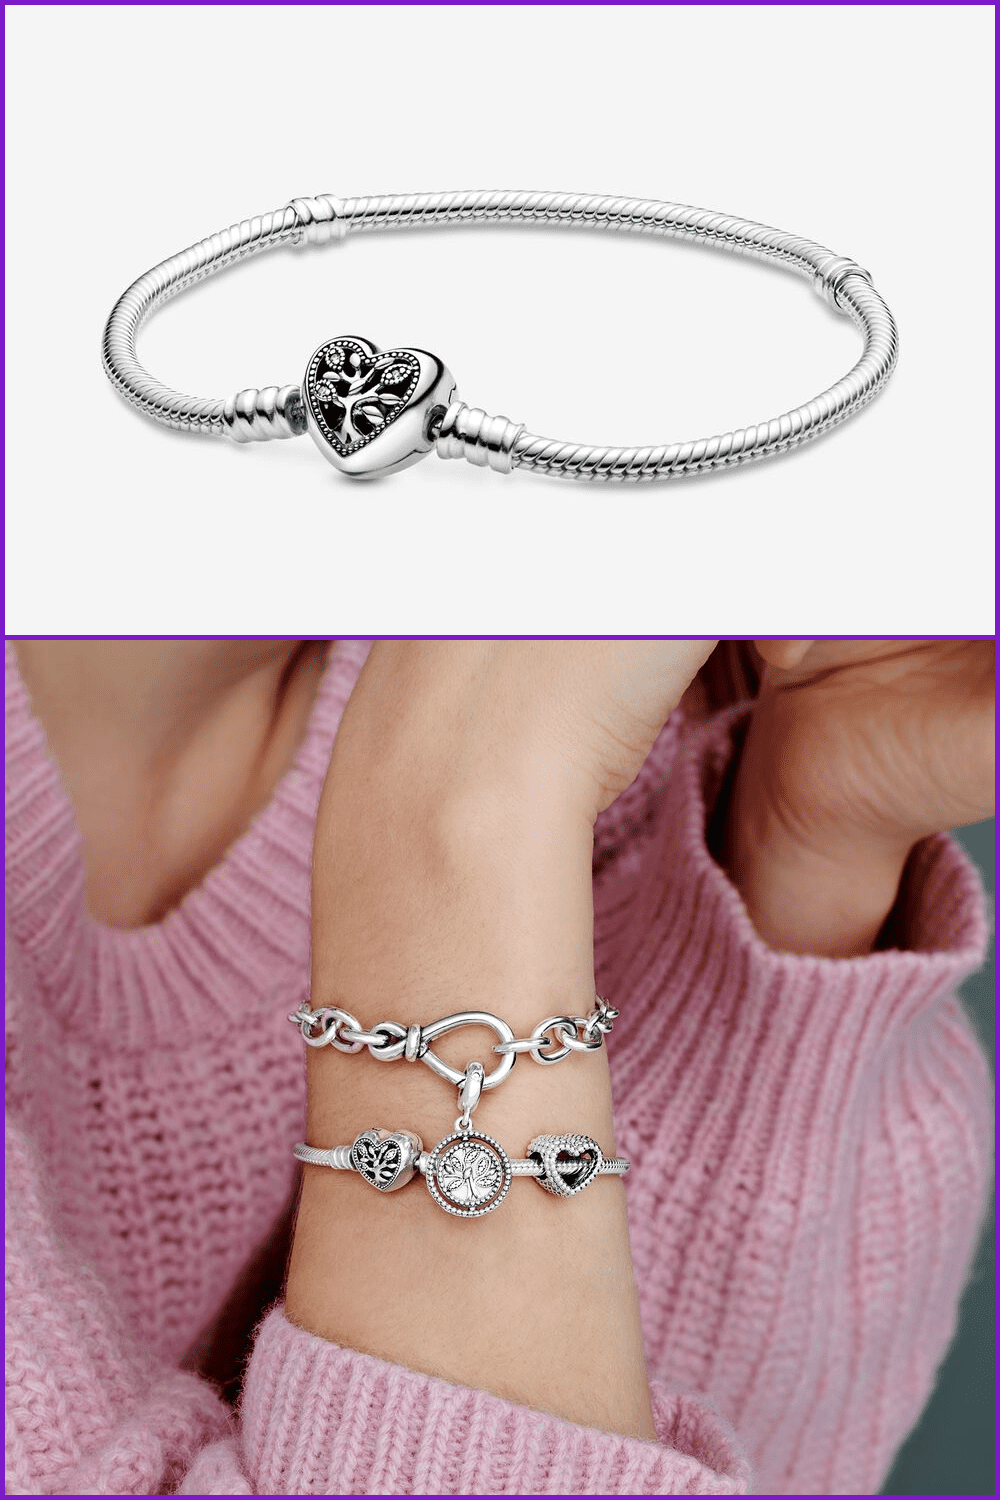 Pandora bracelet with a heart.